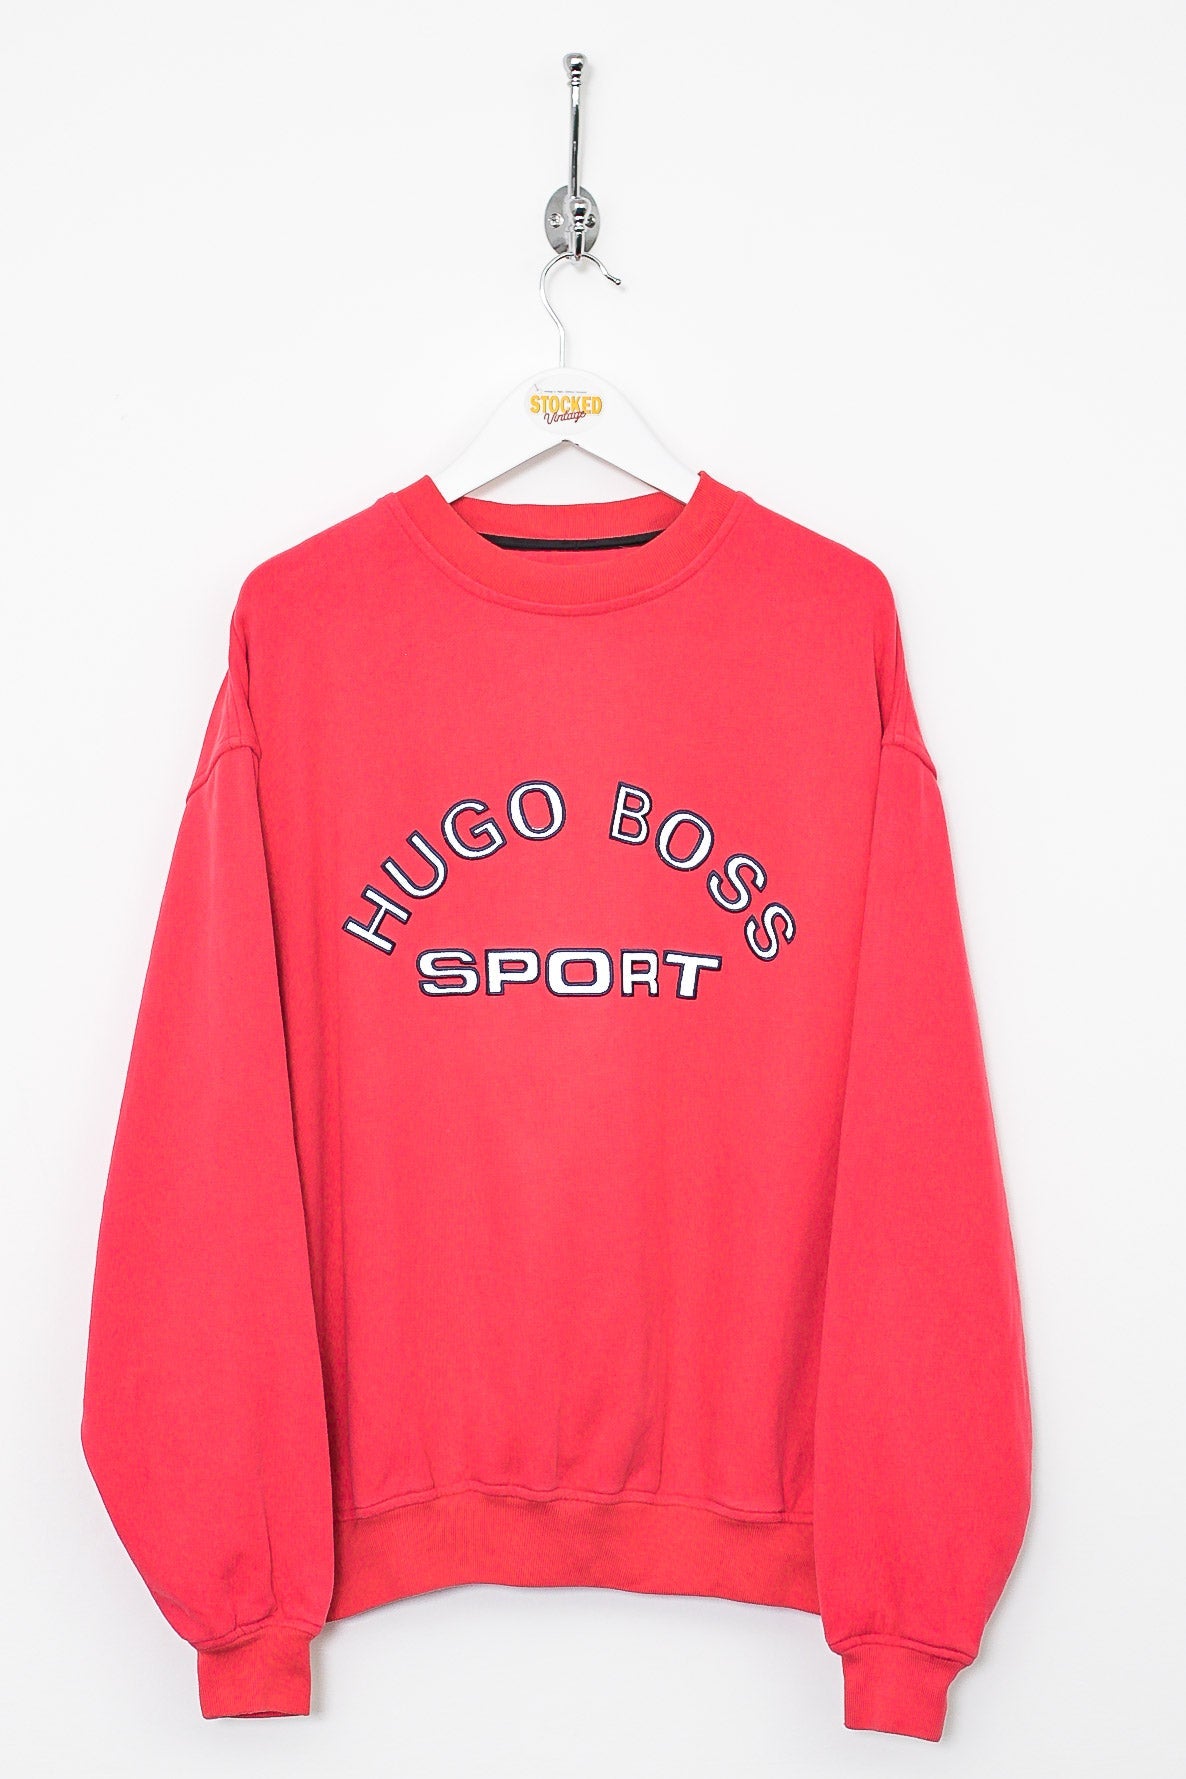 00s Hugo Boss Sweatshirt (M)